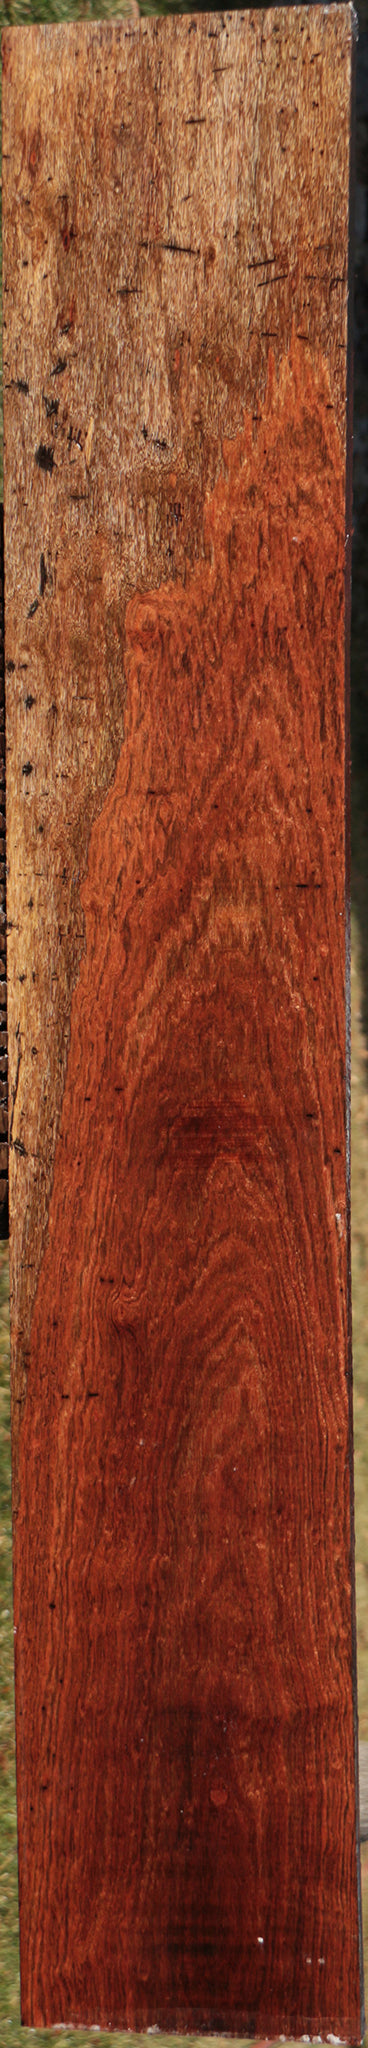 Extra Fancy Chechen Lumber